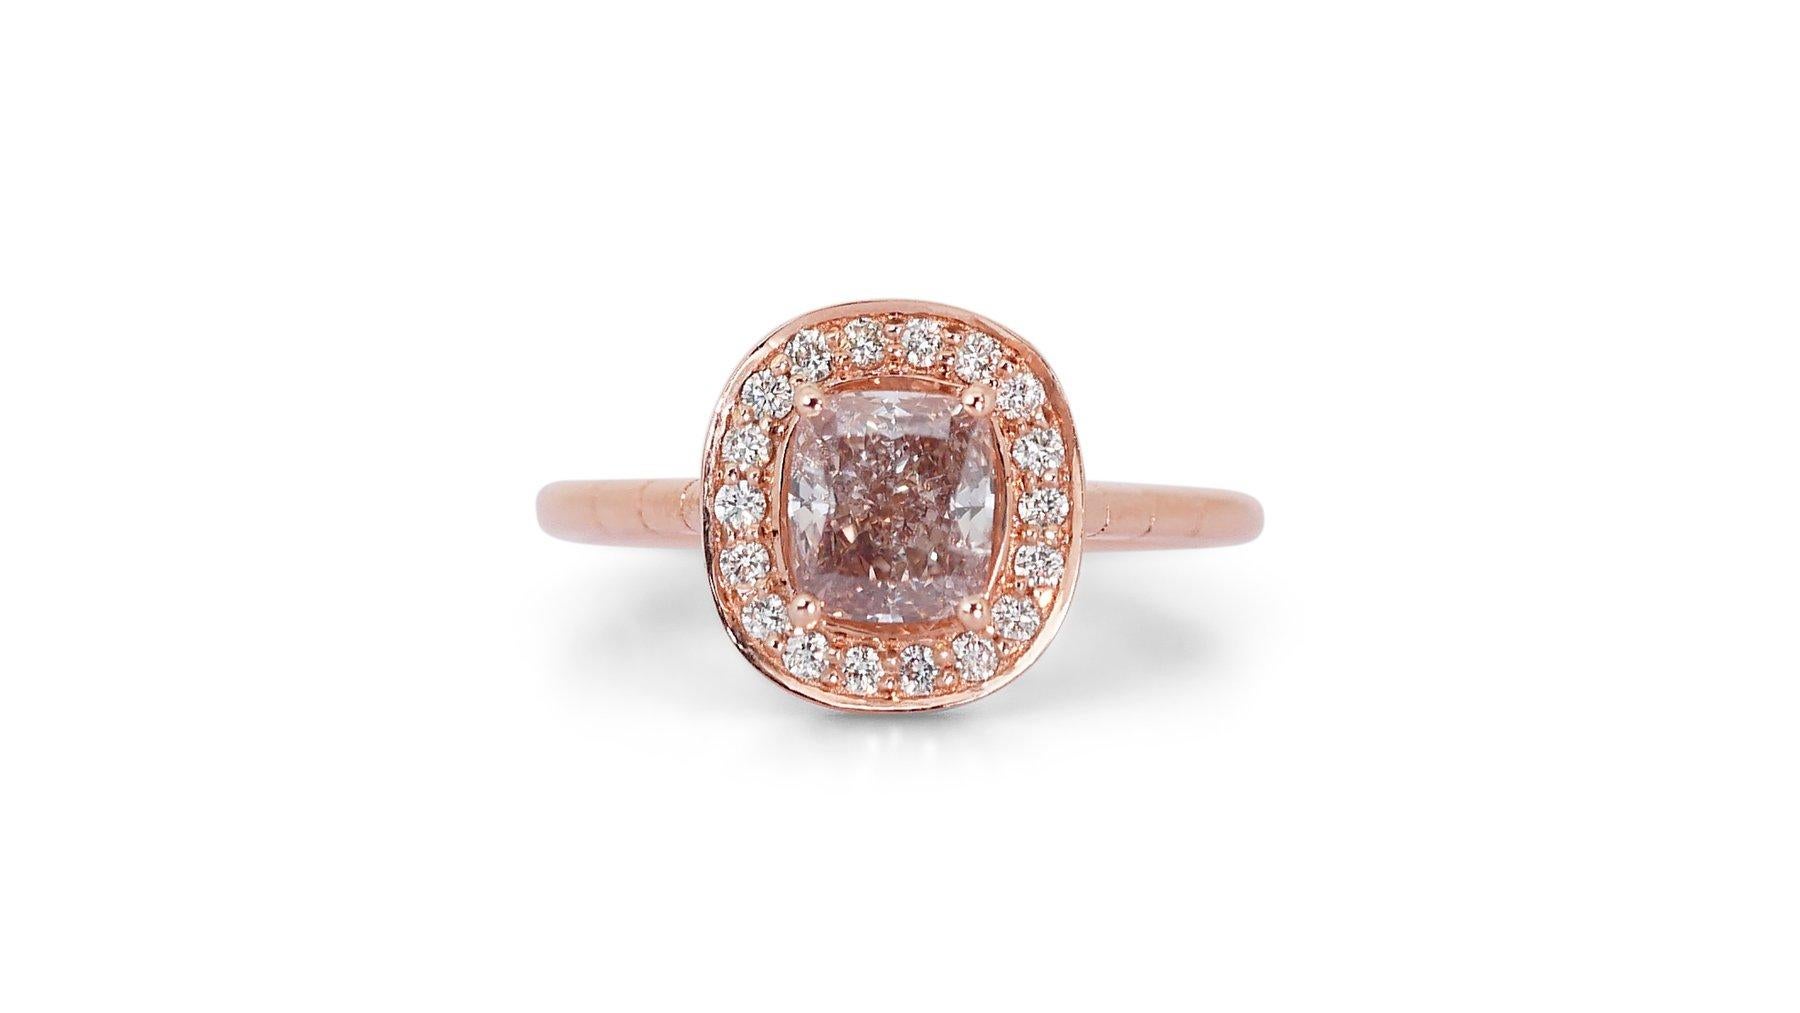 Cushion Cut Elegant 18 kt. Pink Gold Ring with 1.25 ct Total Natural Diamonds - IGI Cert